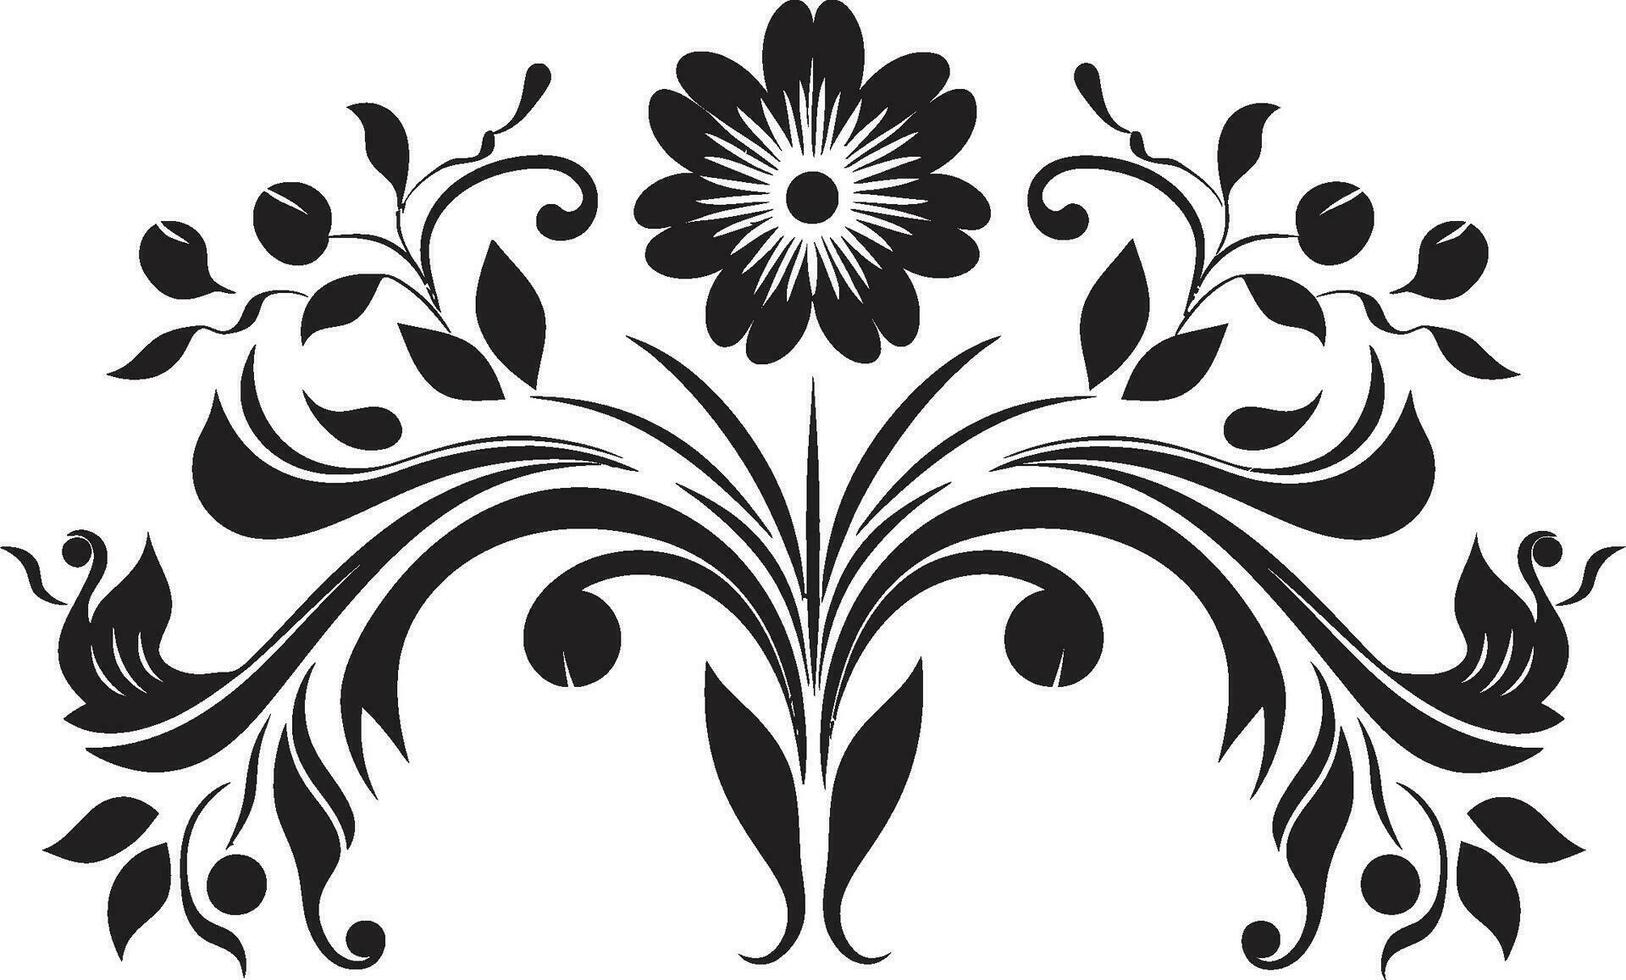 Floral Lattice Geometric Tile Vector Botanic Tessellations Black Emblem Design